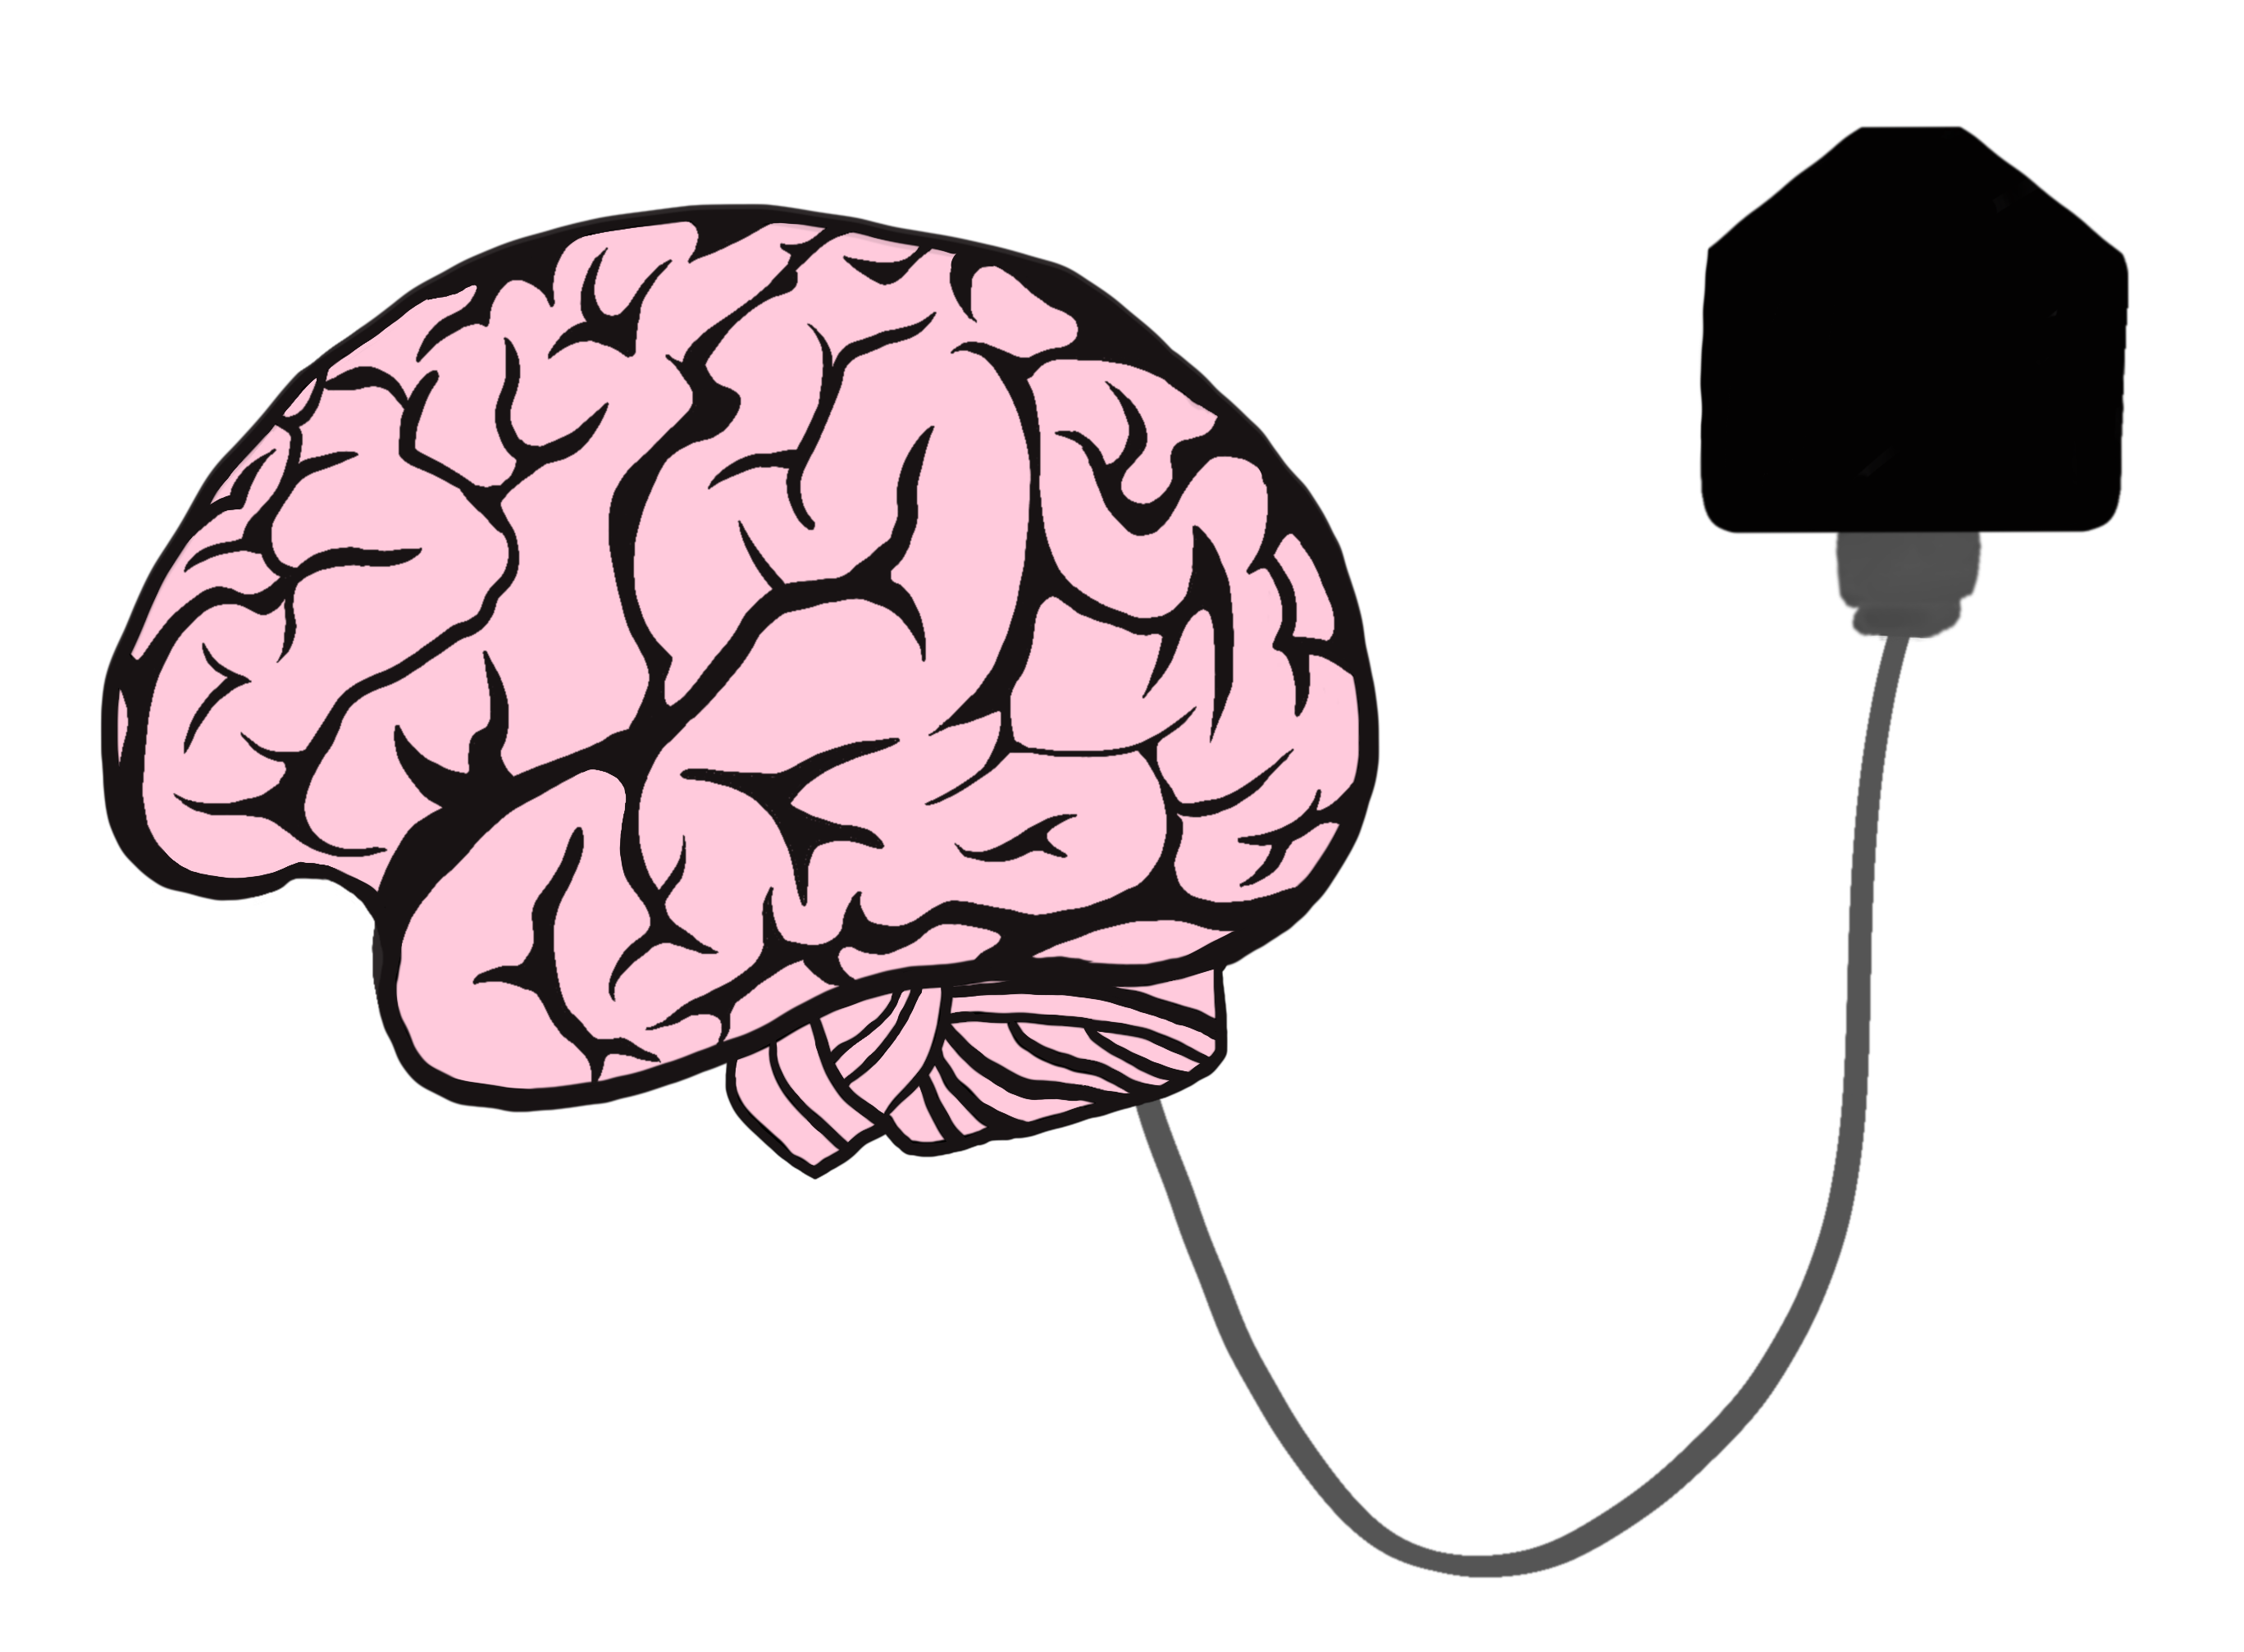 Brain with a plug